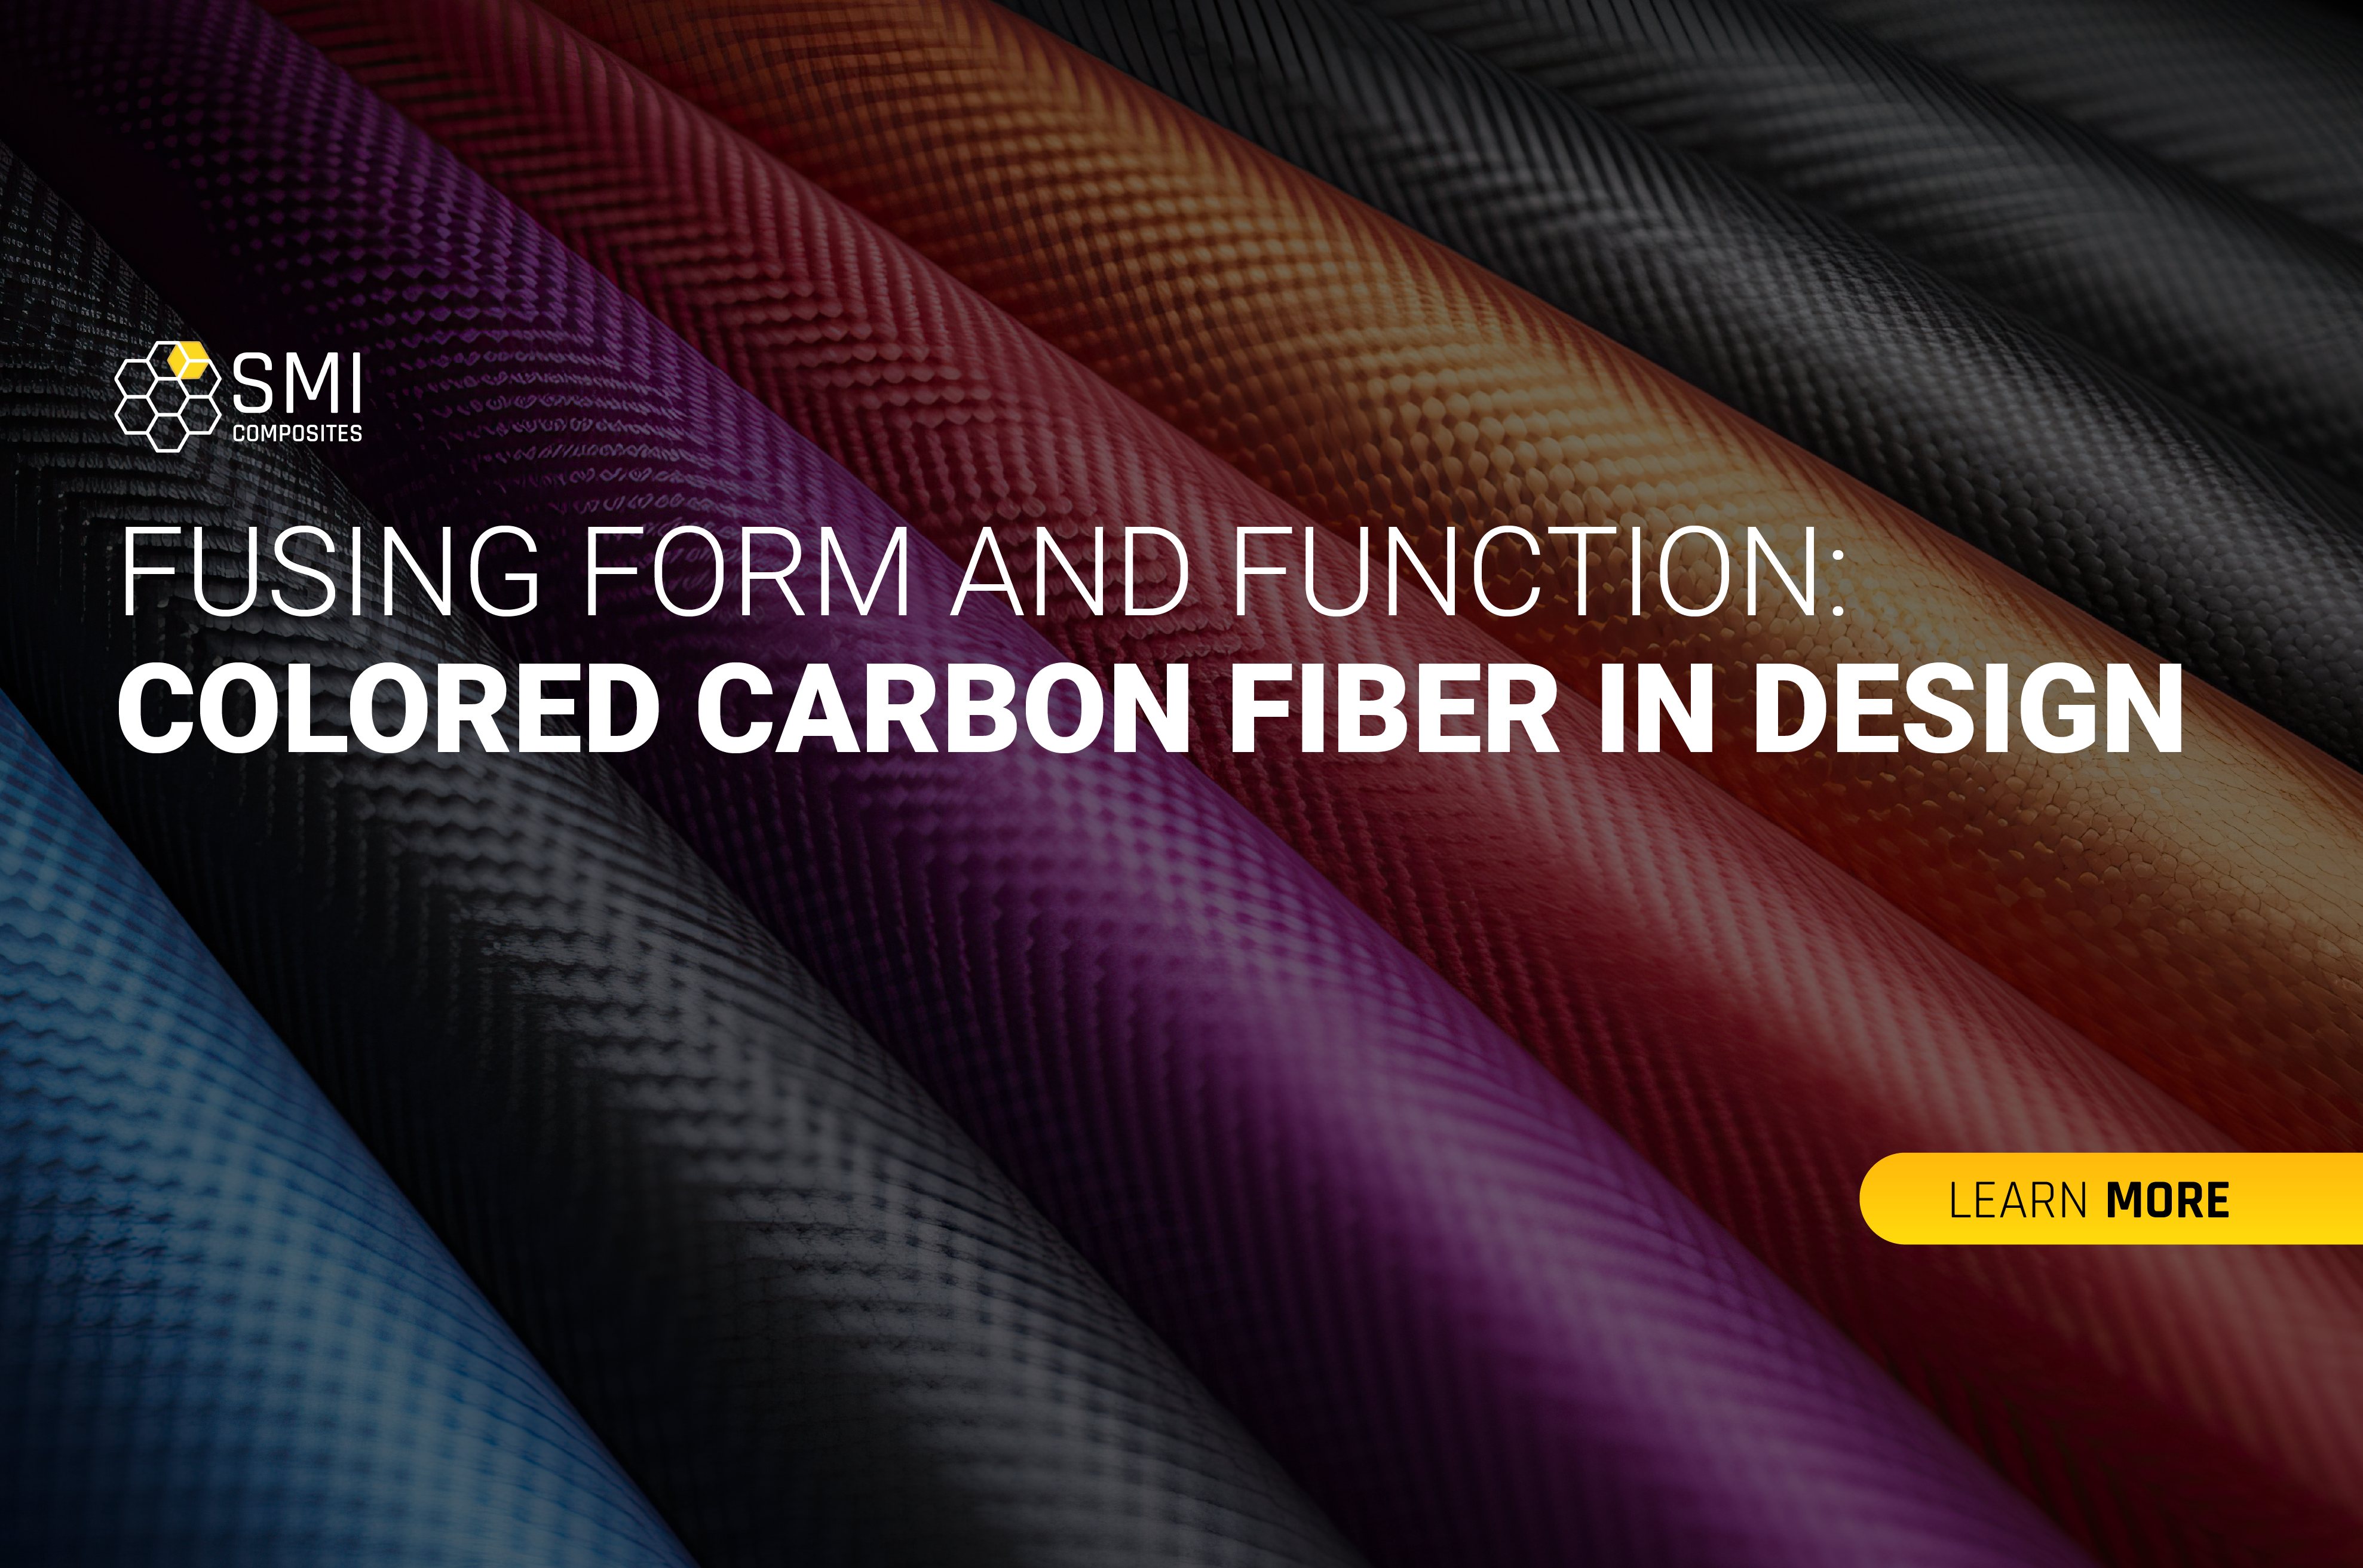  colored carbon fiber